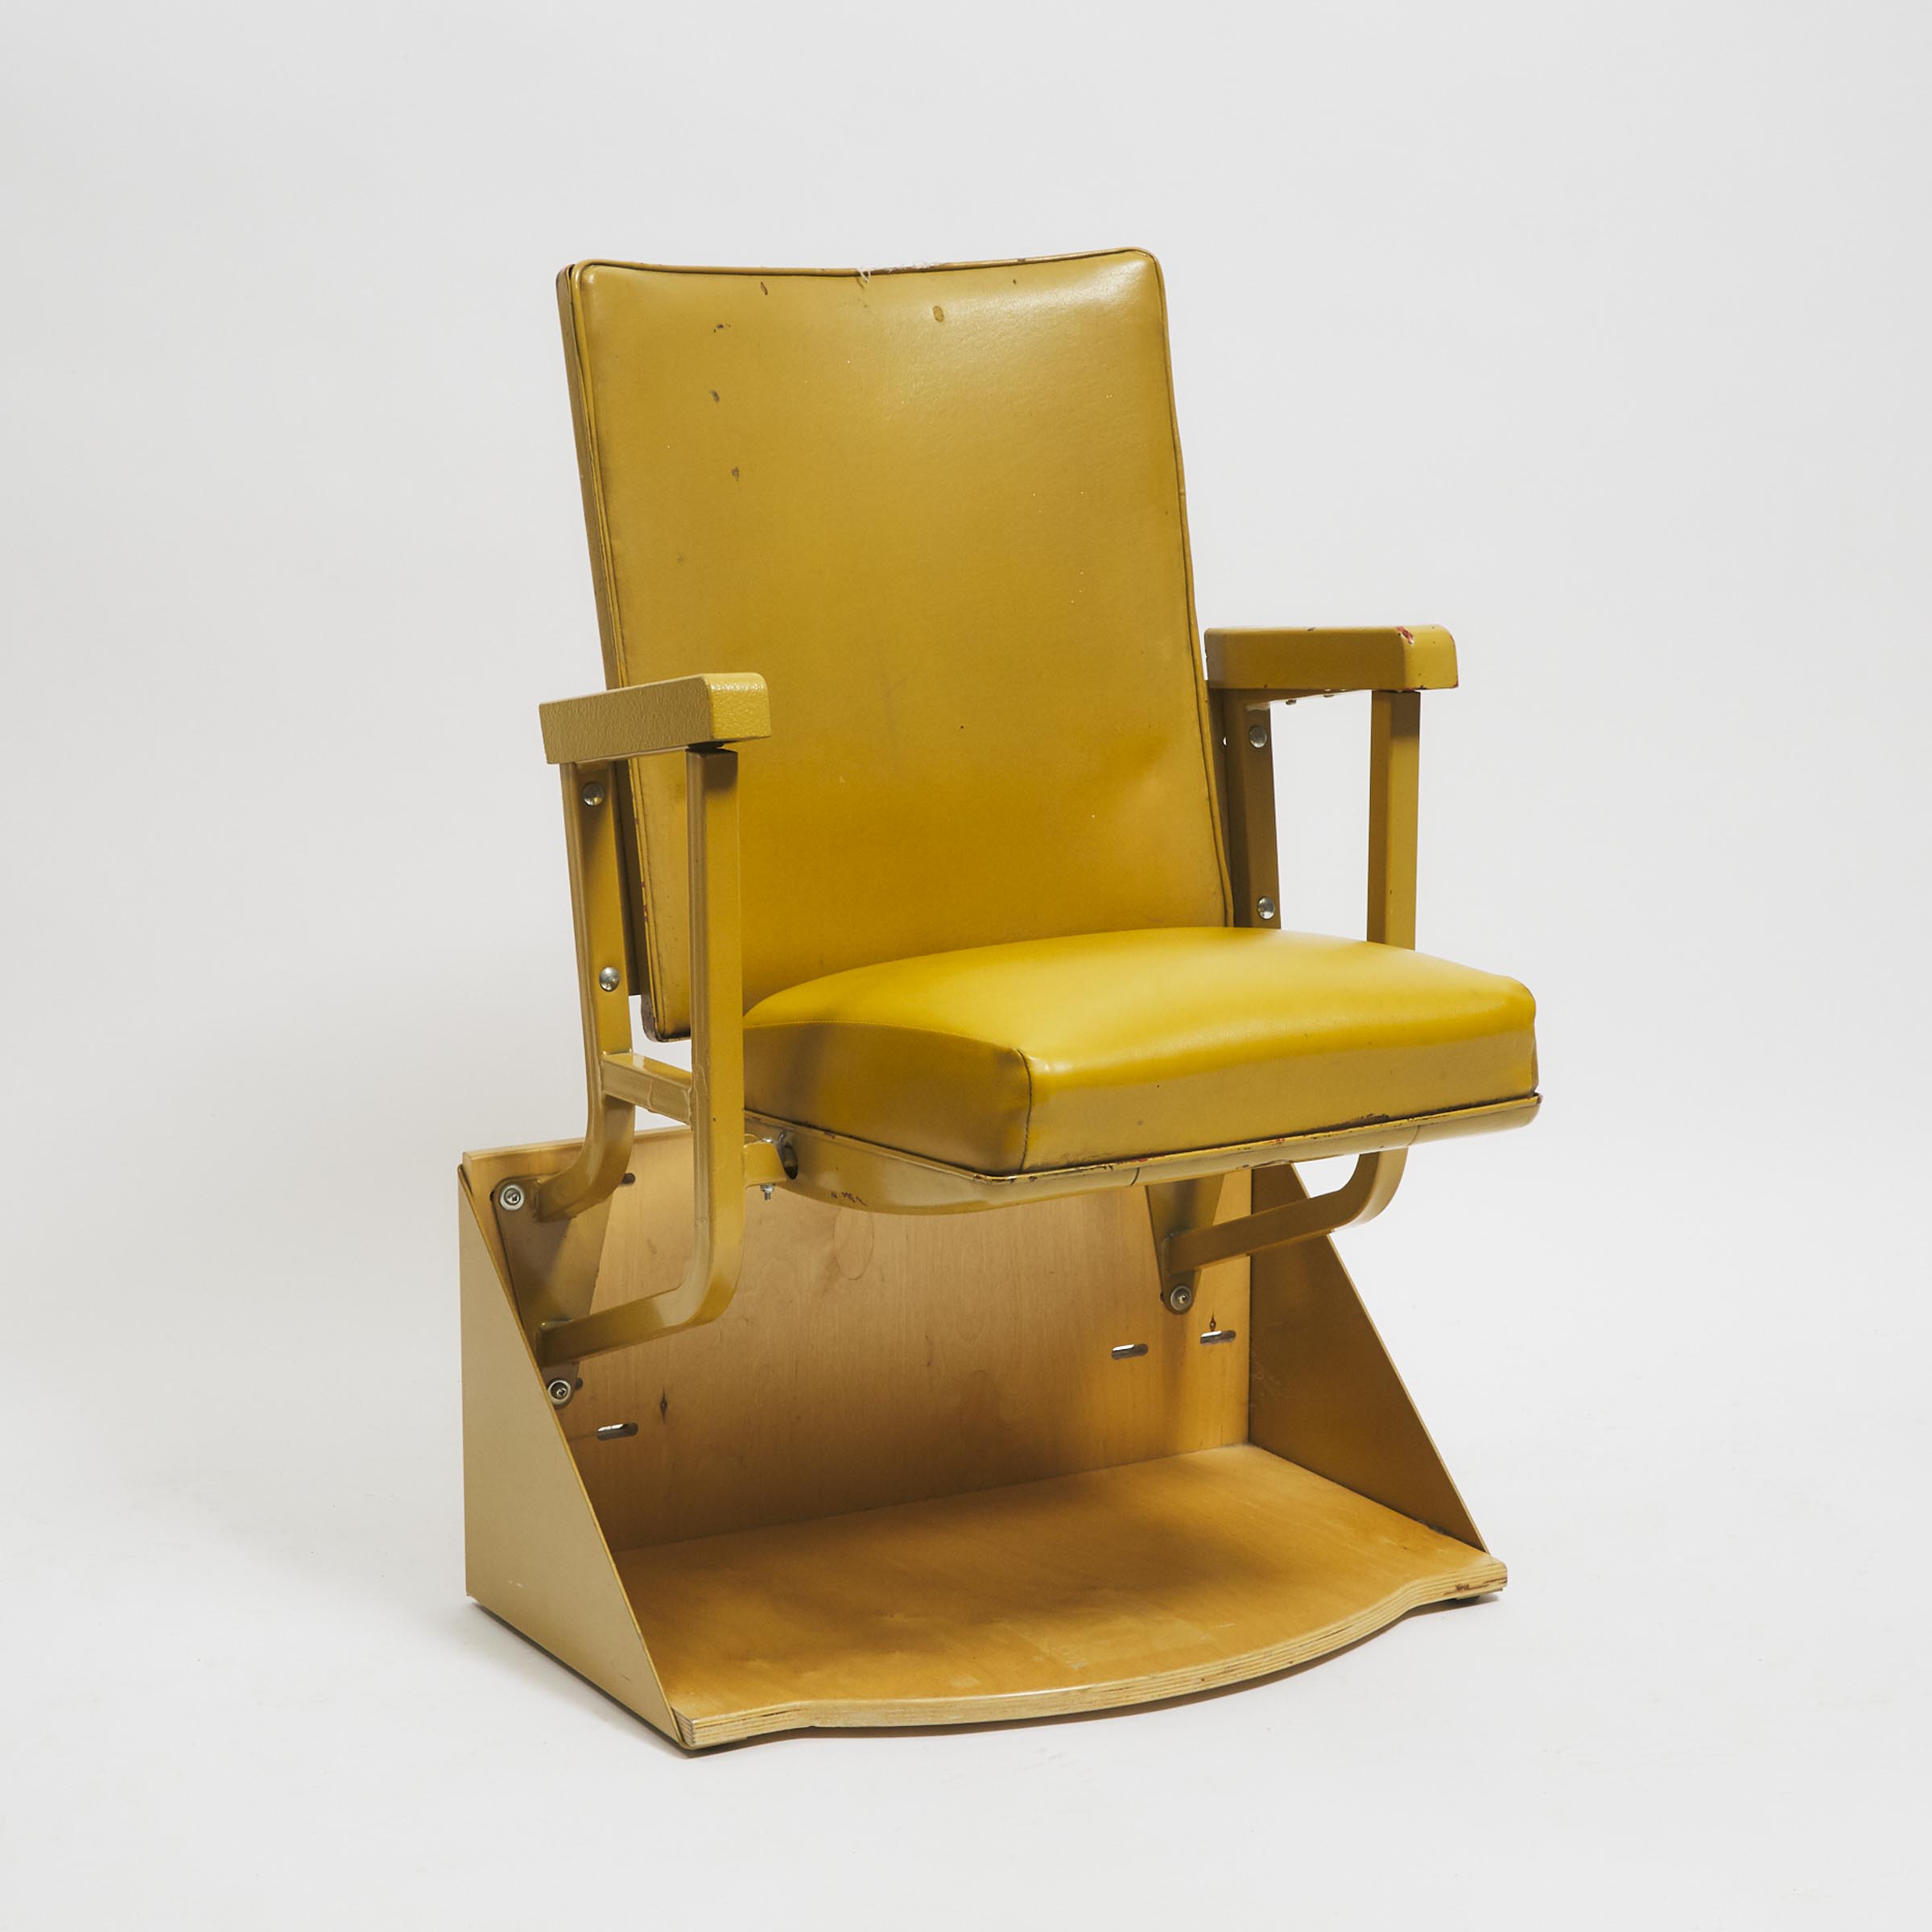 Maple Leaf Gardens Gold Seat, c.1931